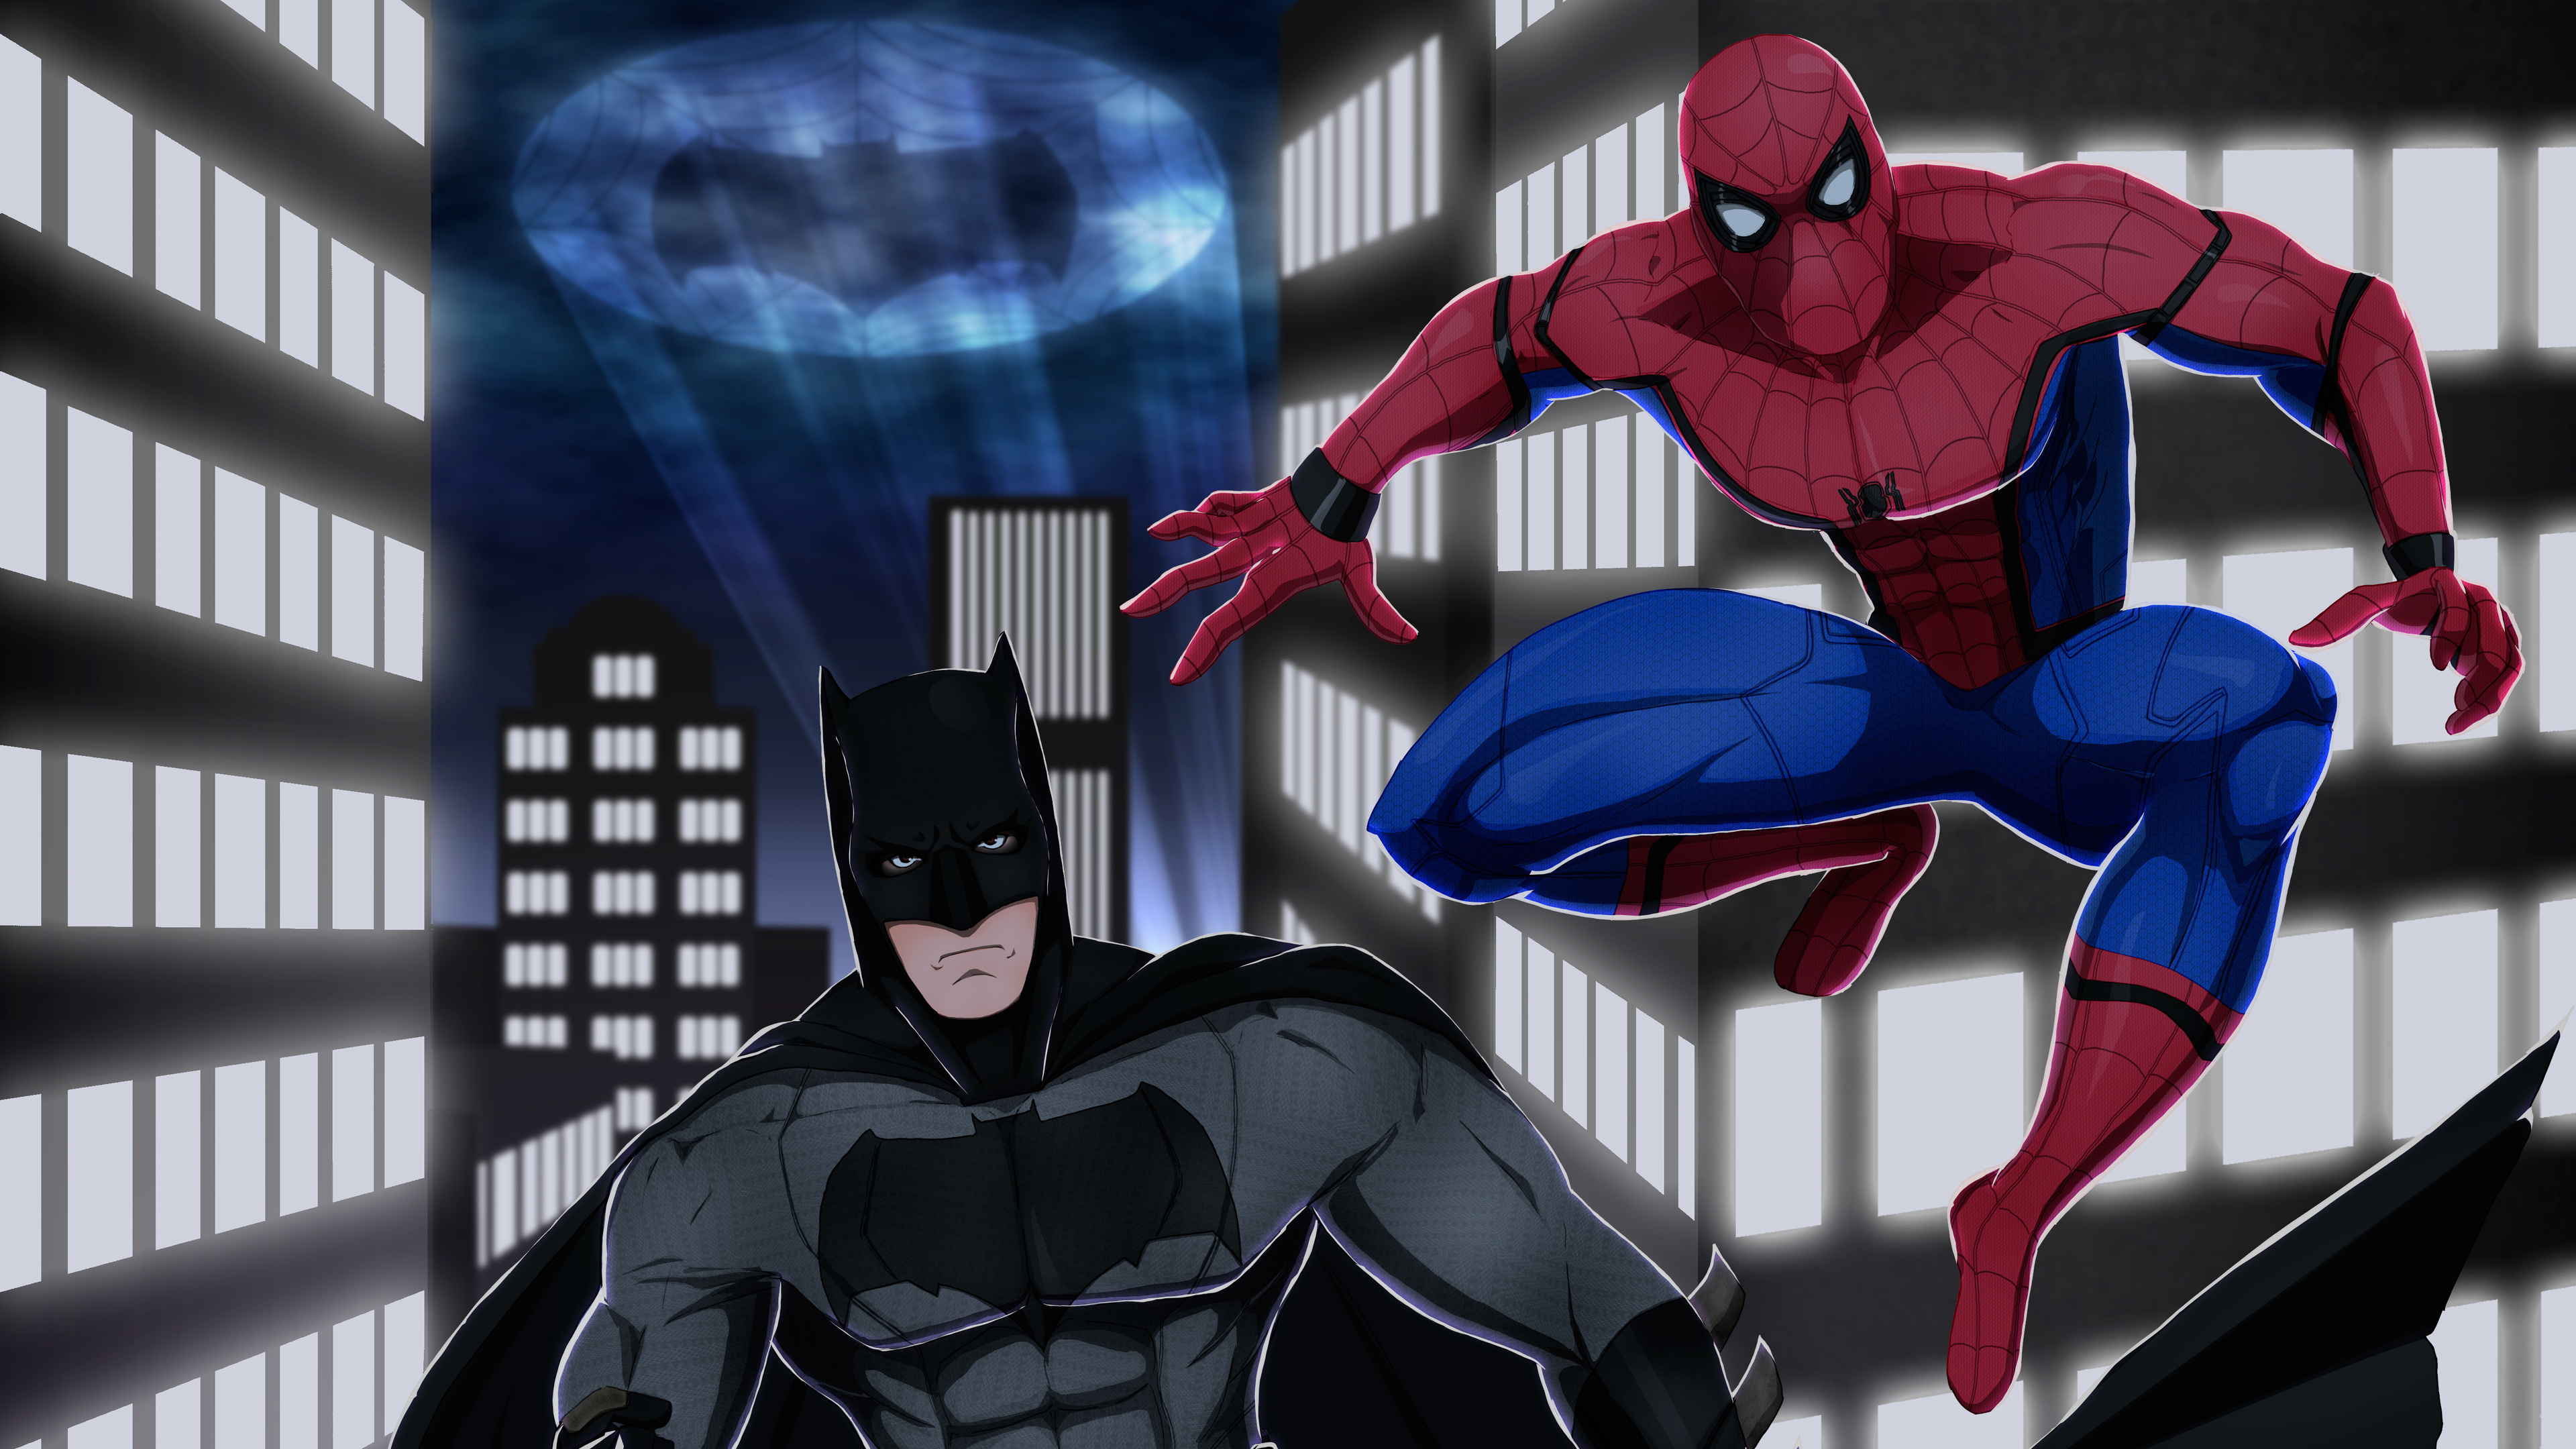 Batman And Spider-Man Wallpapers - Wallpaper Cave